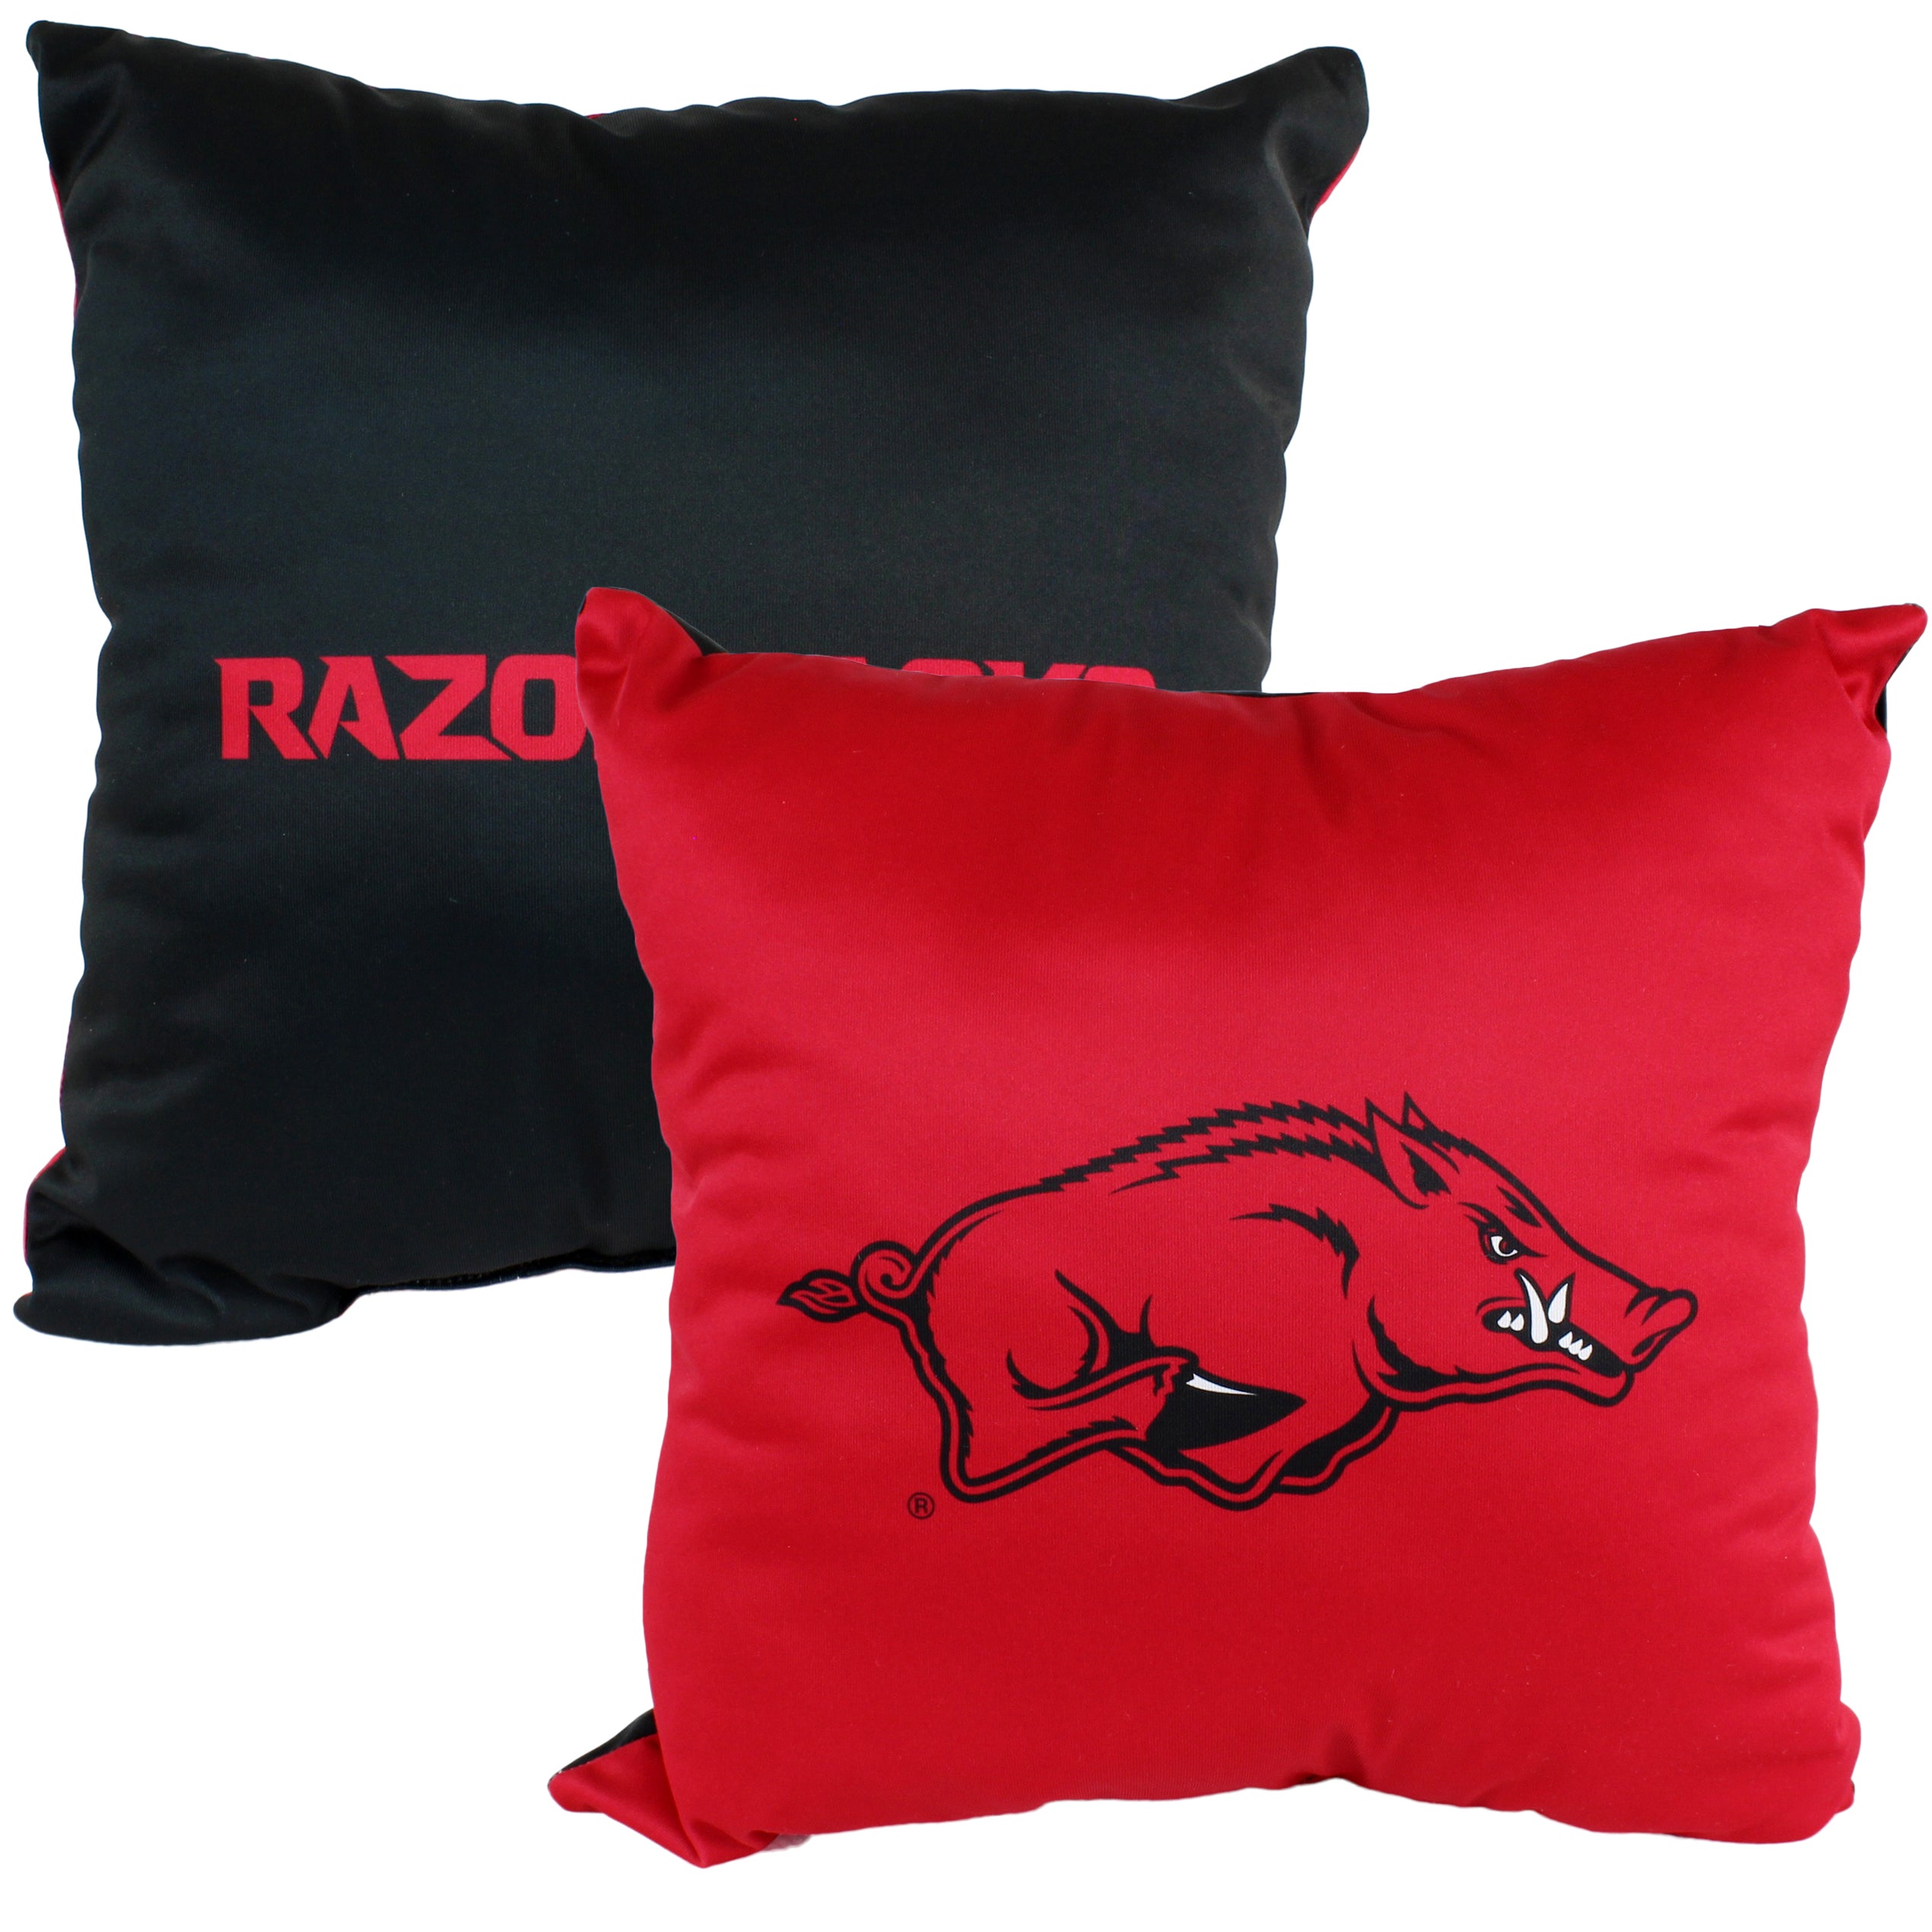 Arkansas Razorbacks 16 inch Reversible Decorative Pillow - image 4 of 4